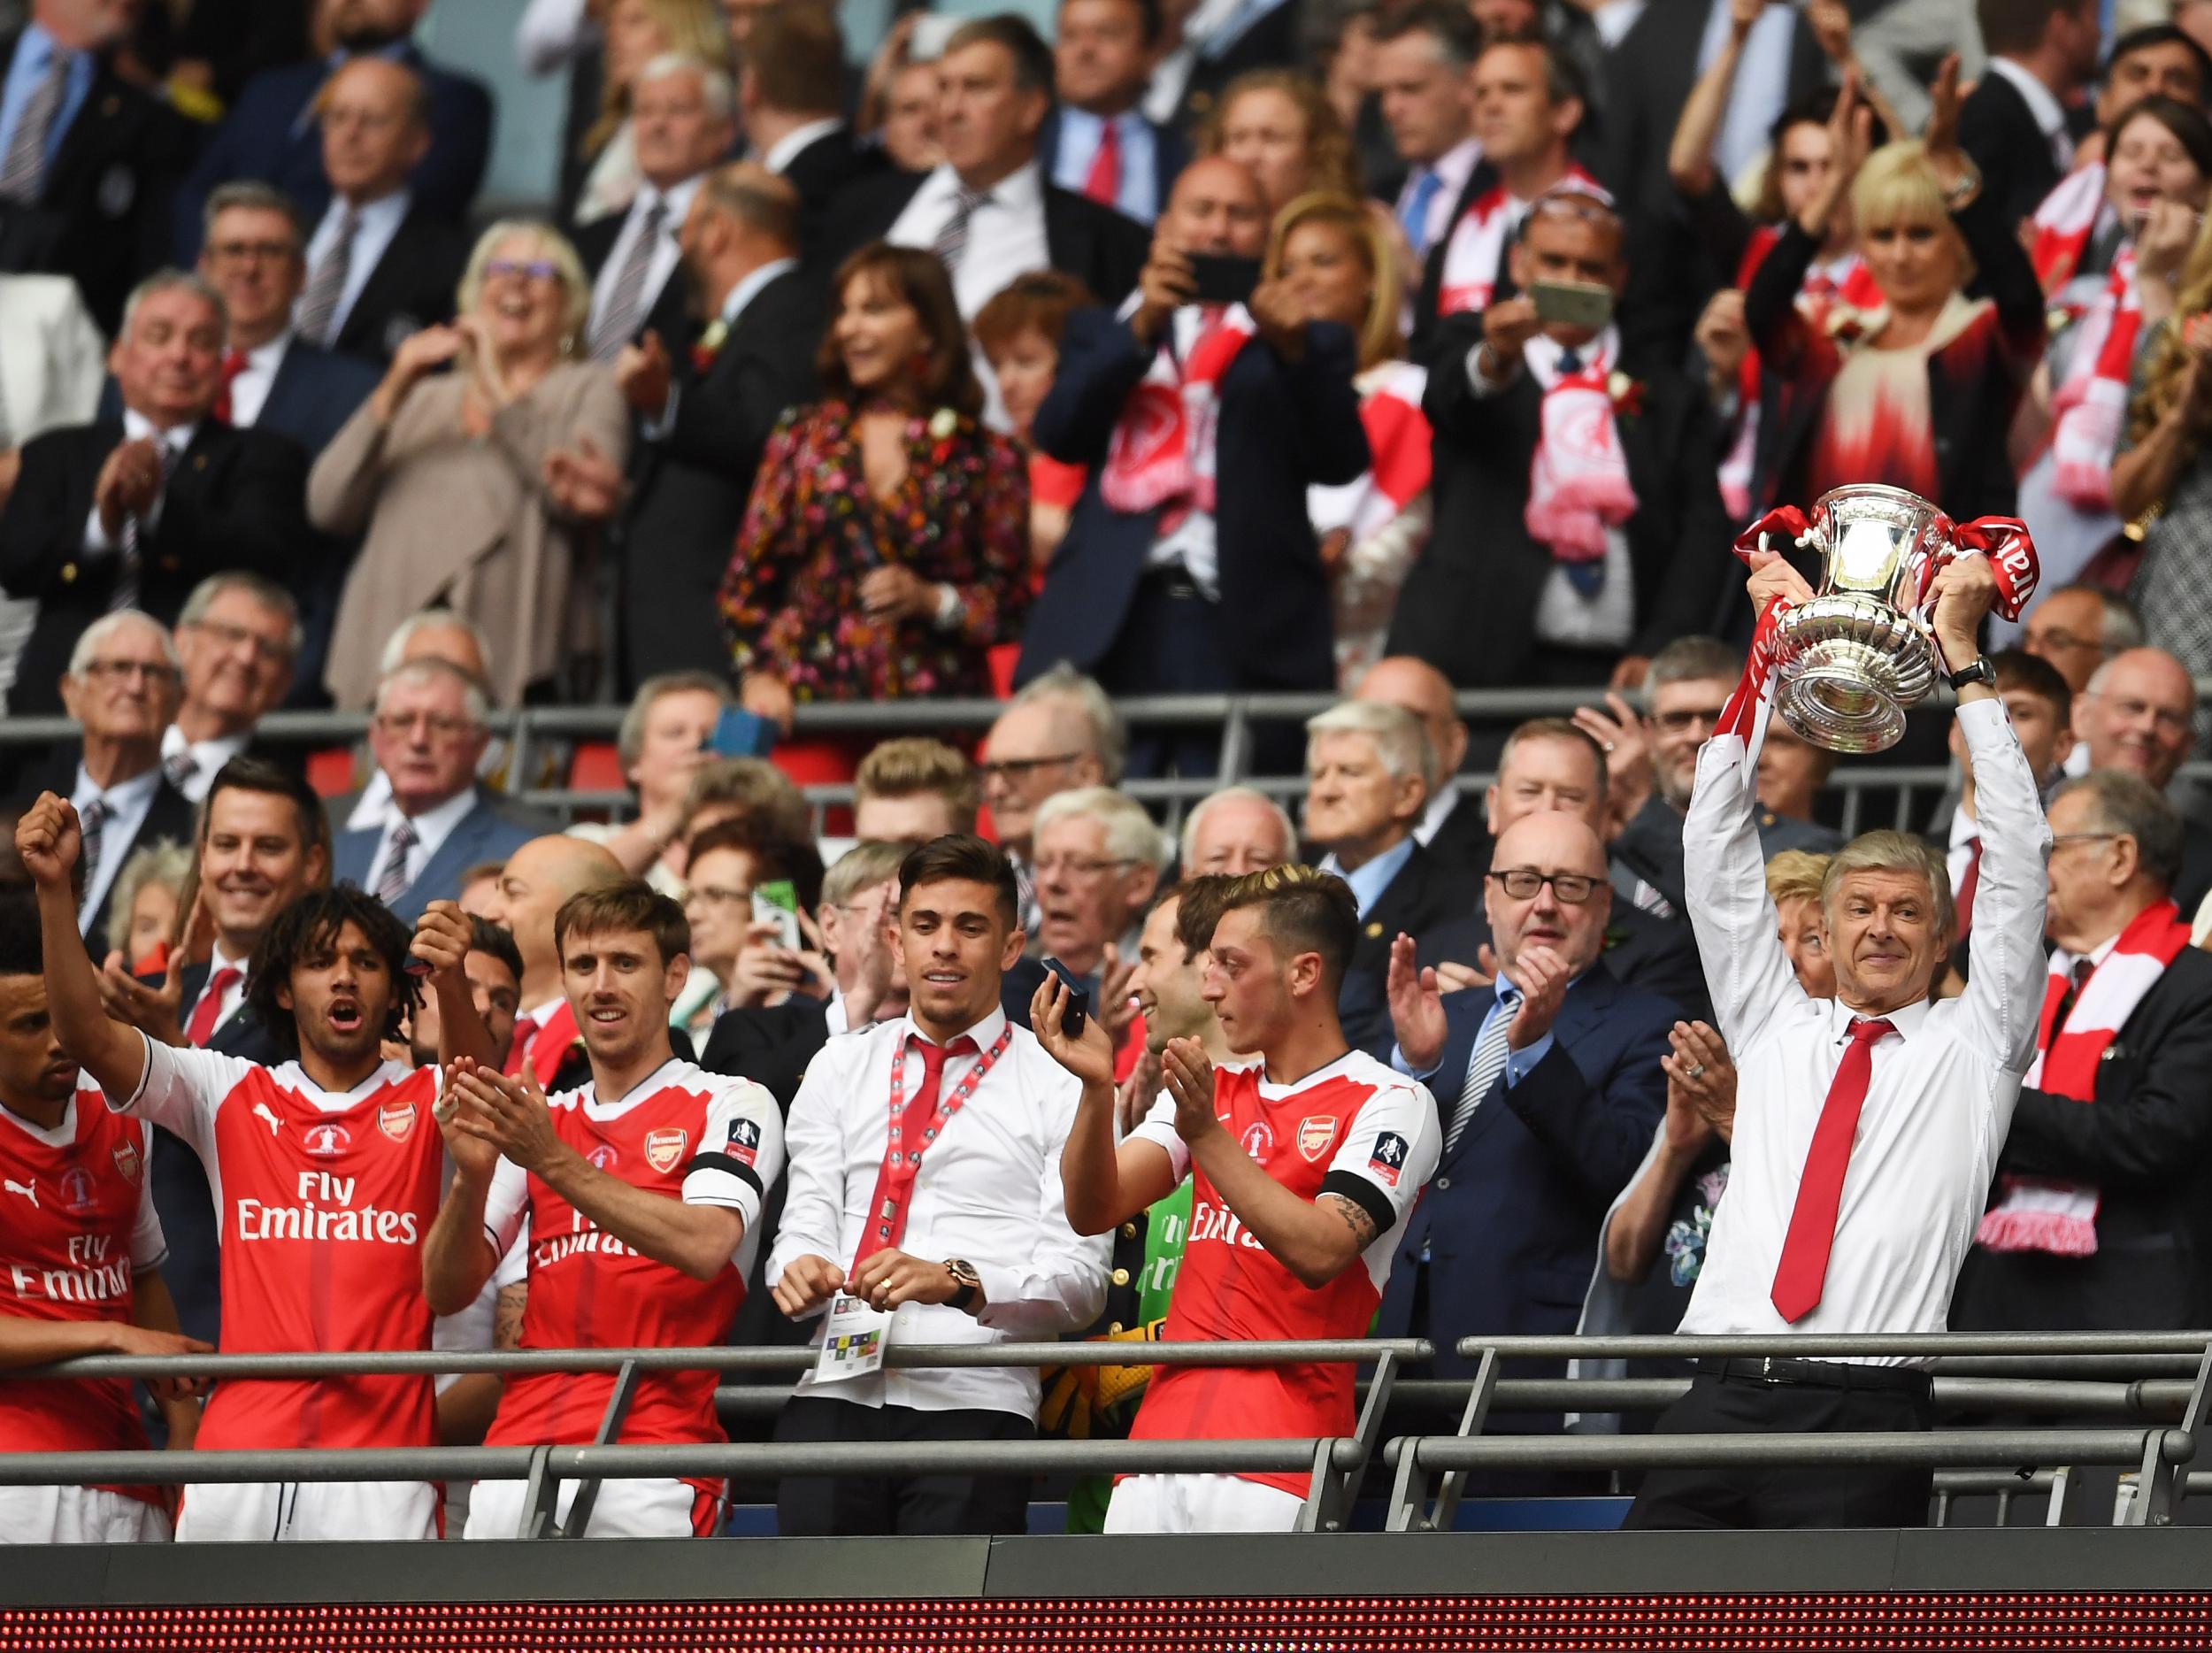 Wenger lifts the FA Cup at Wembley Stadium